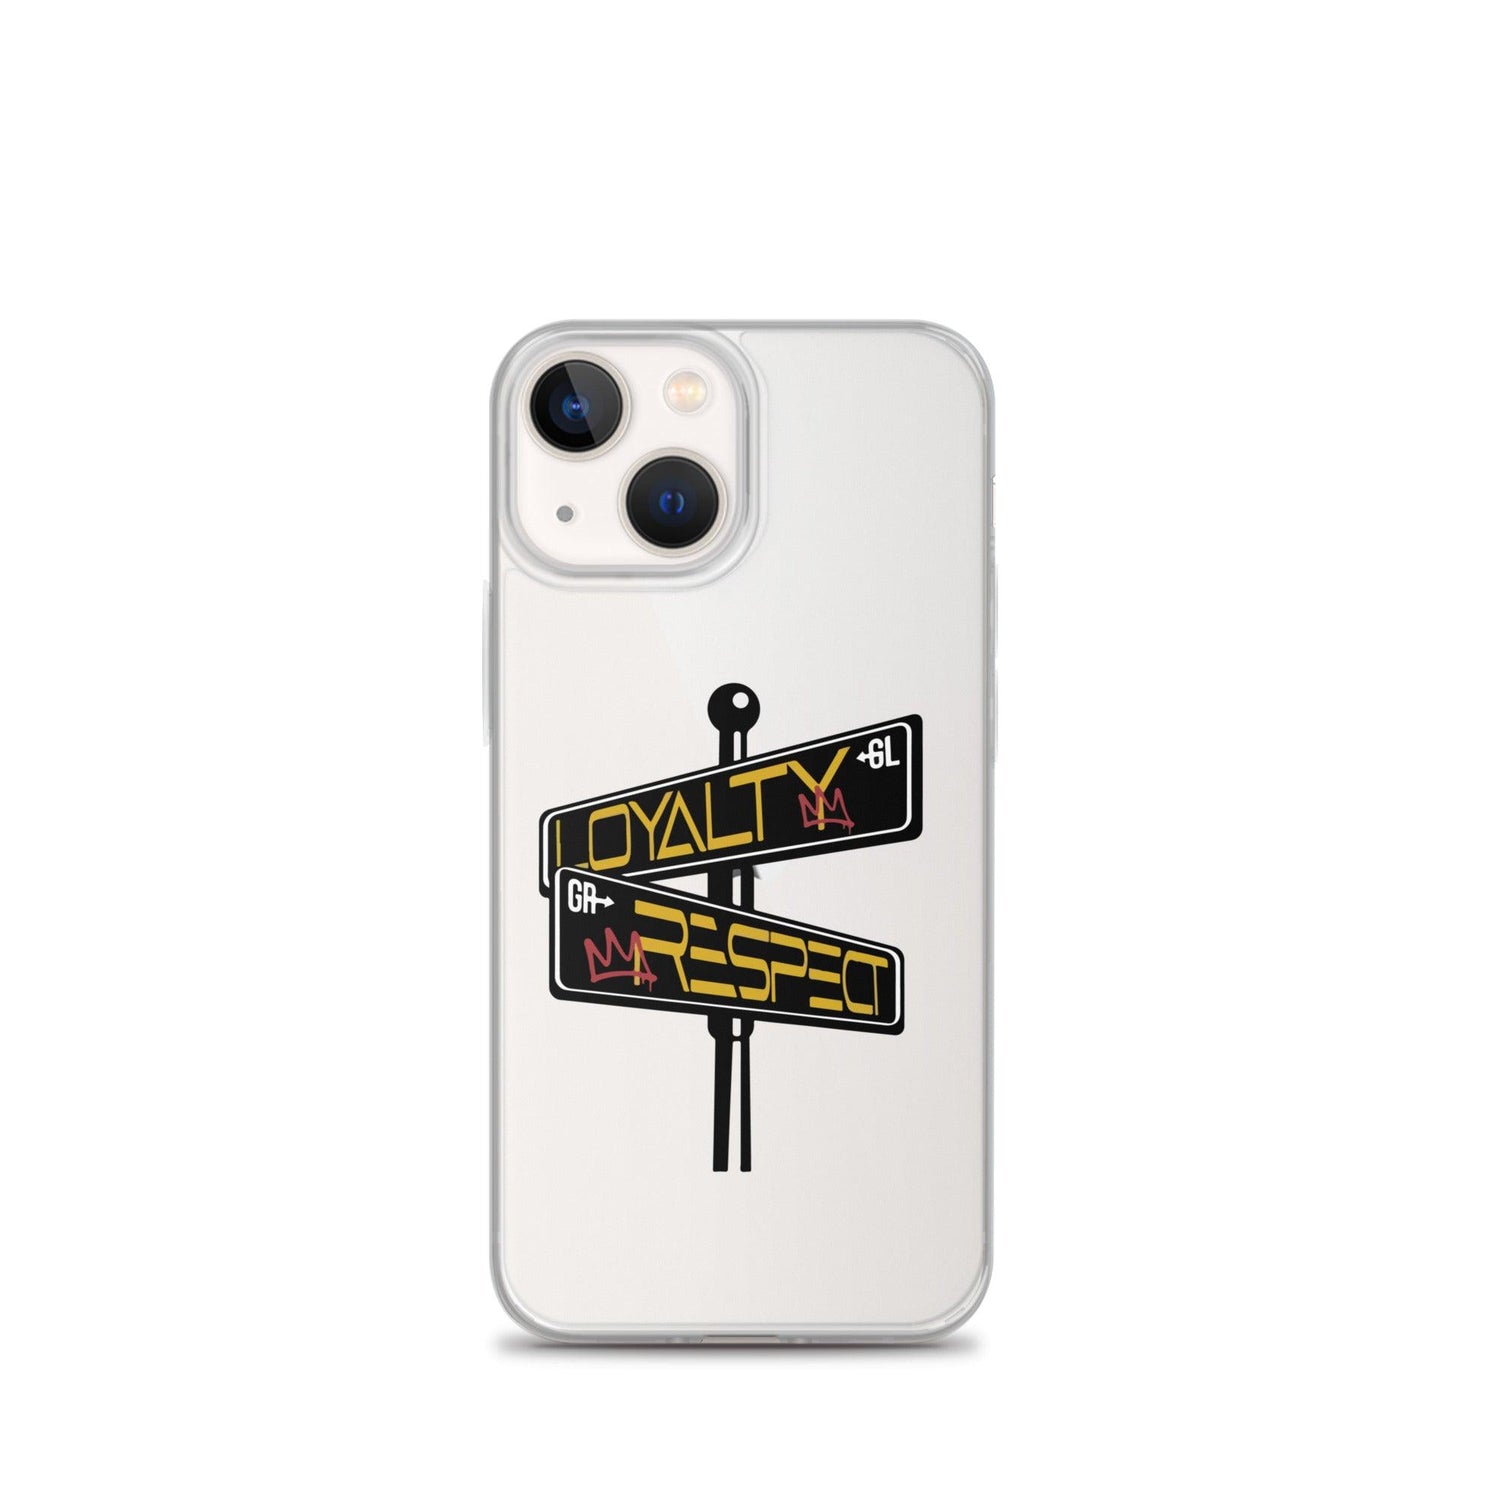 Kesean Carter "Essential" iPhone Case - Fan Arch